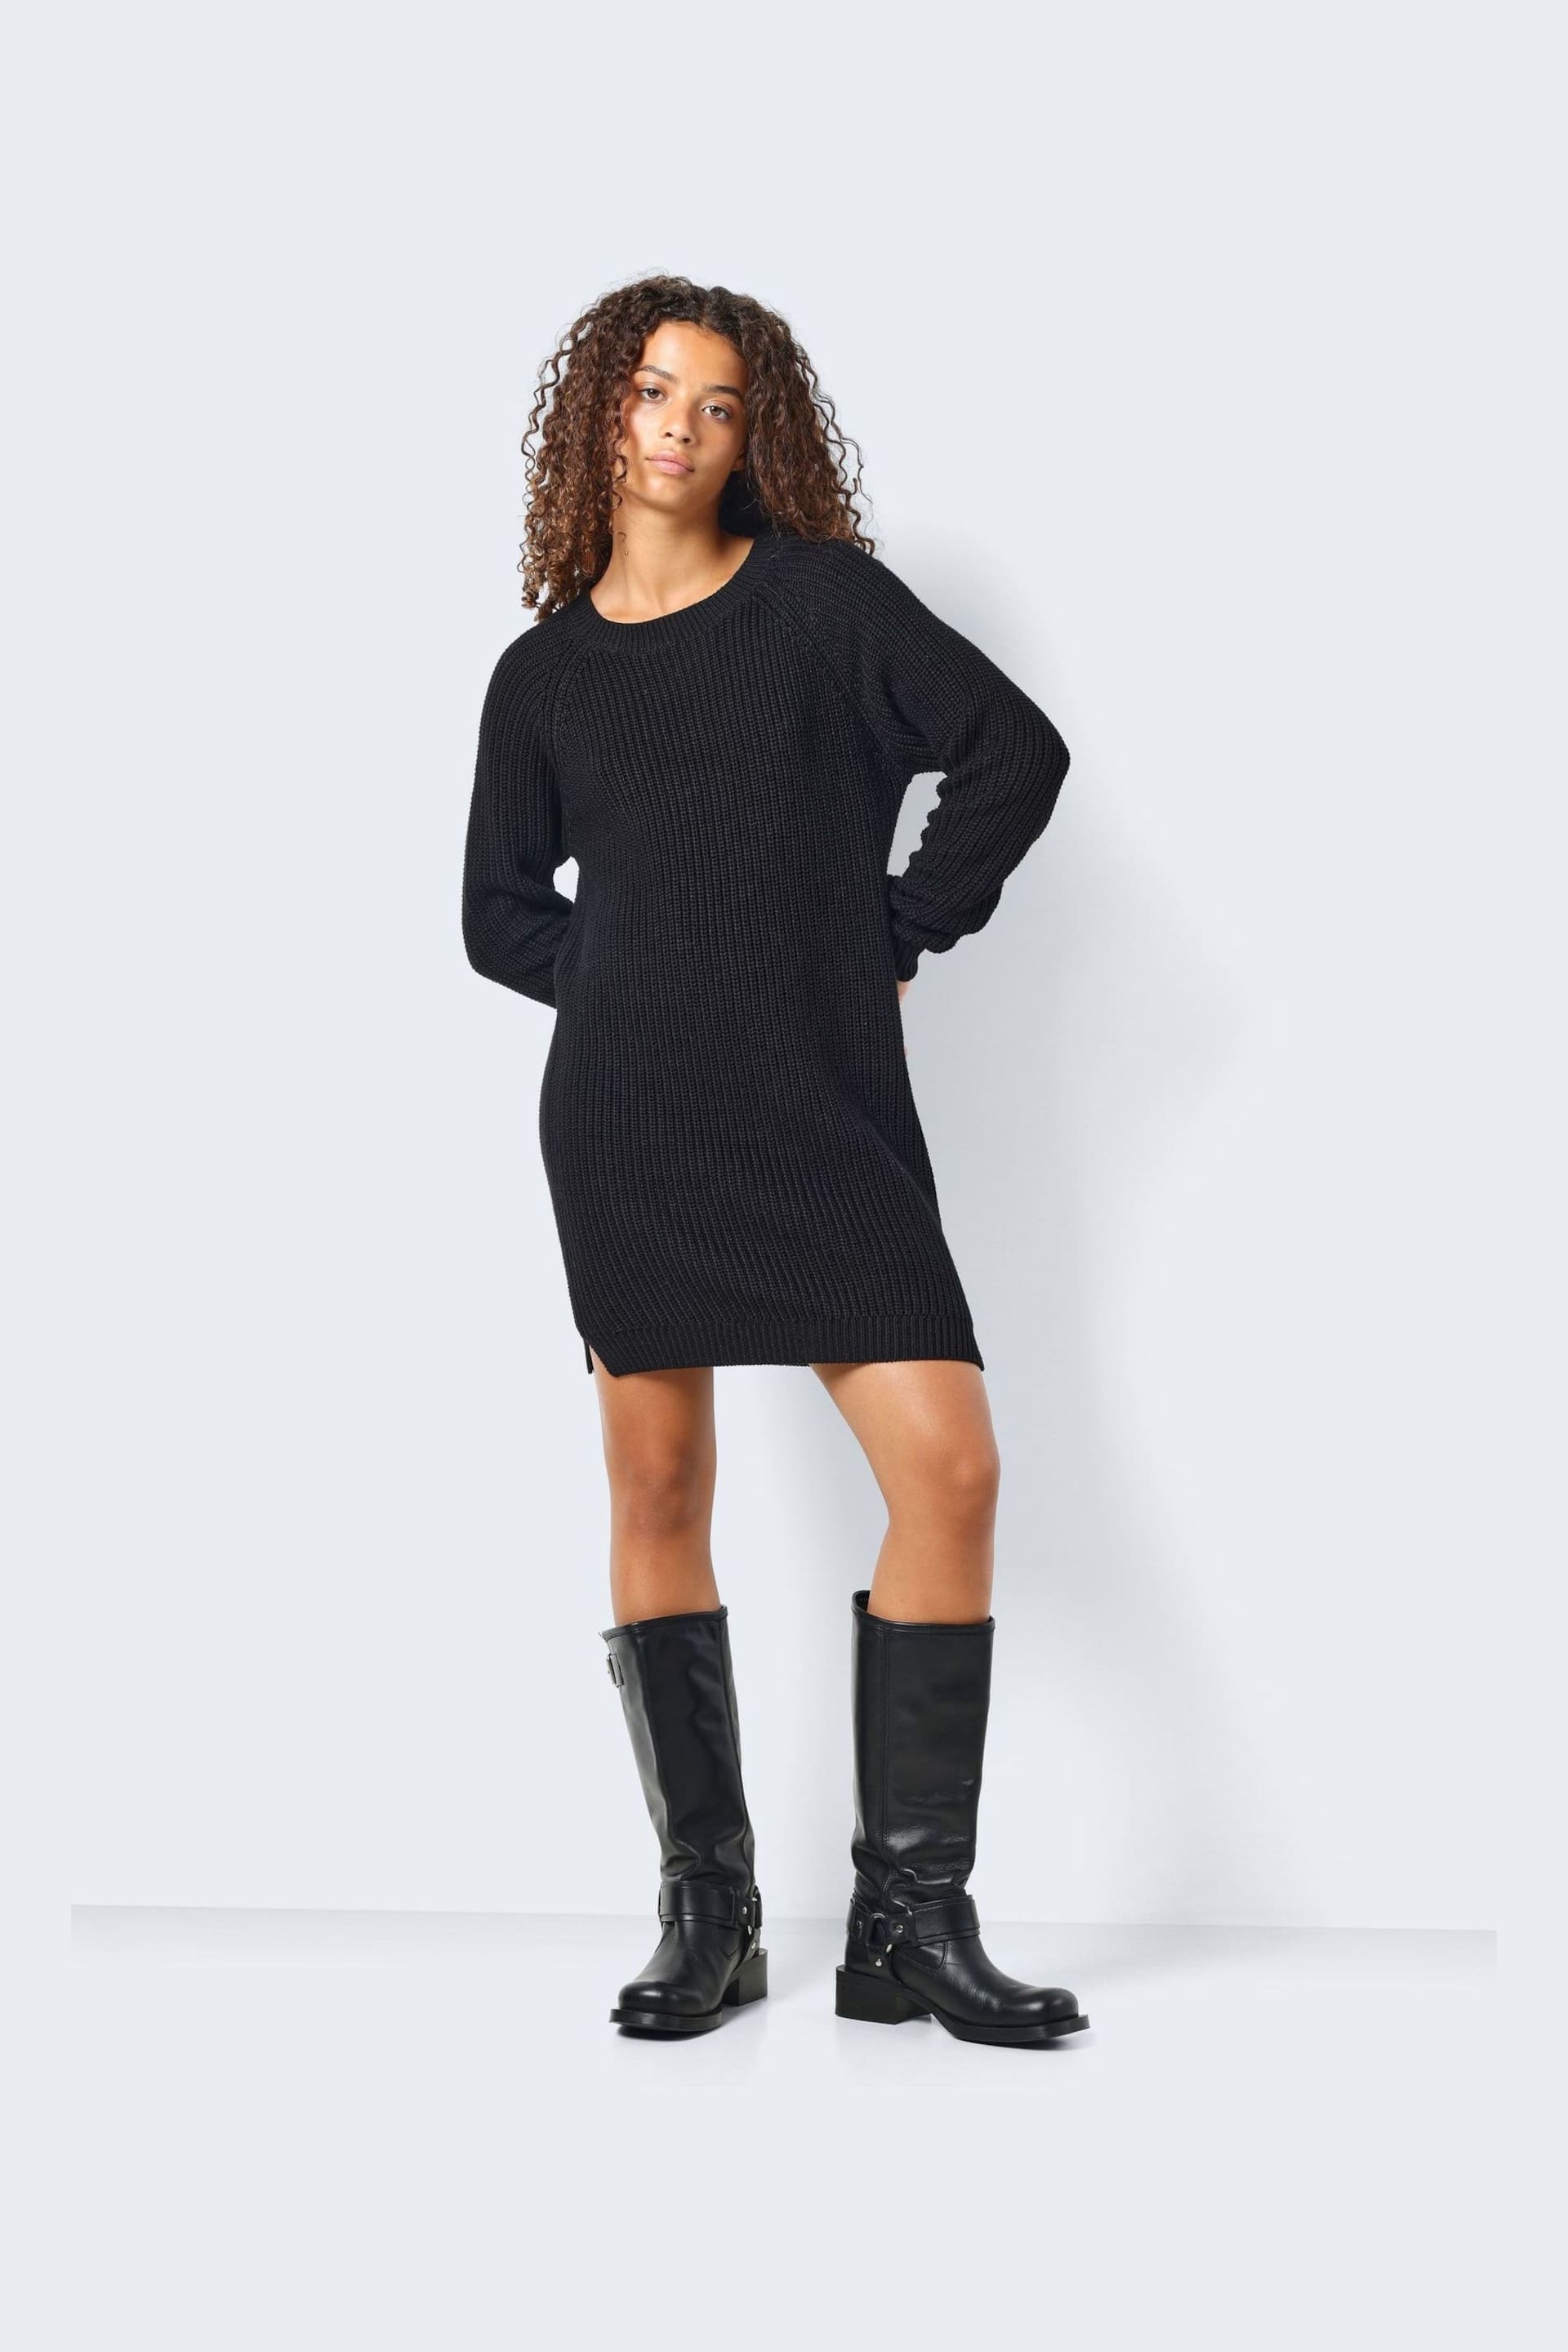 NOISY MAY Black Long Sleeve Jumper Dress - Image 4 of 5